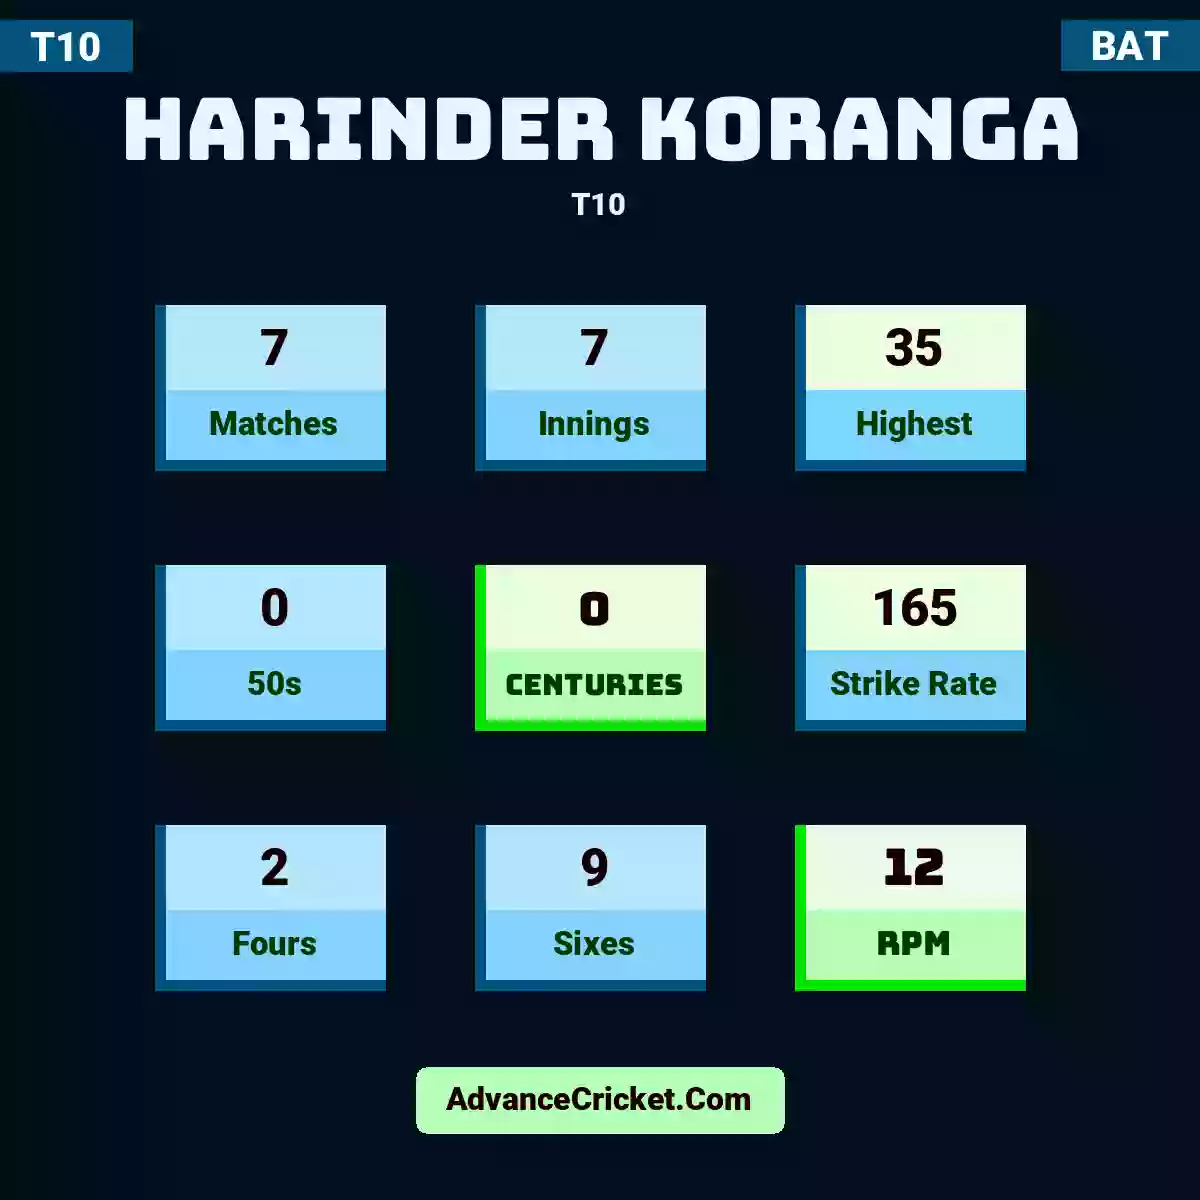 Harinder Koranga T10 , Harinder Koranga played 7 matches, scored 35 runs as highest, 0 half-centuries, and 0 centuries, with a strike rate of 165. H.Koranga hit 2 fours and 9 sixes, with an RPM of 12.